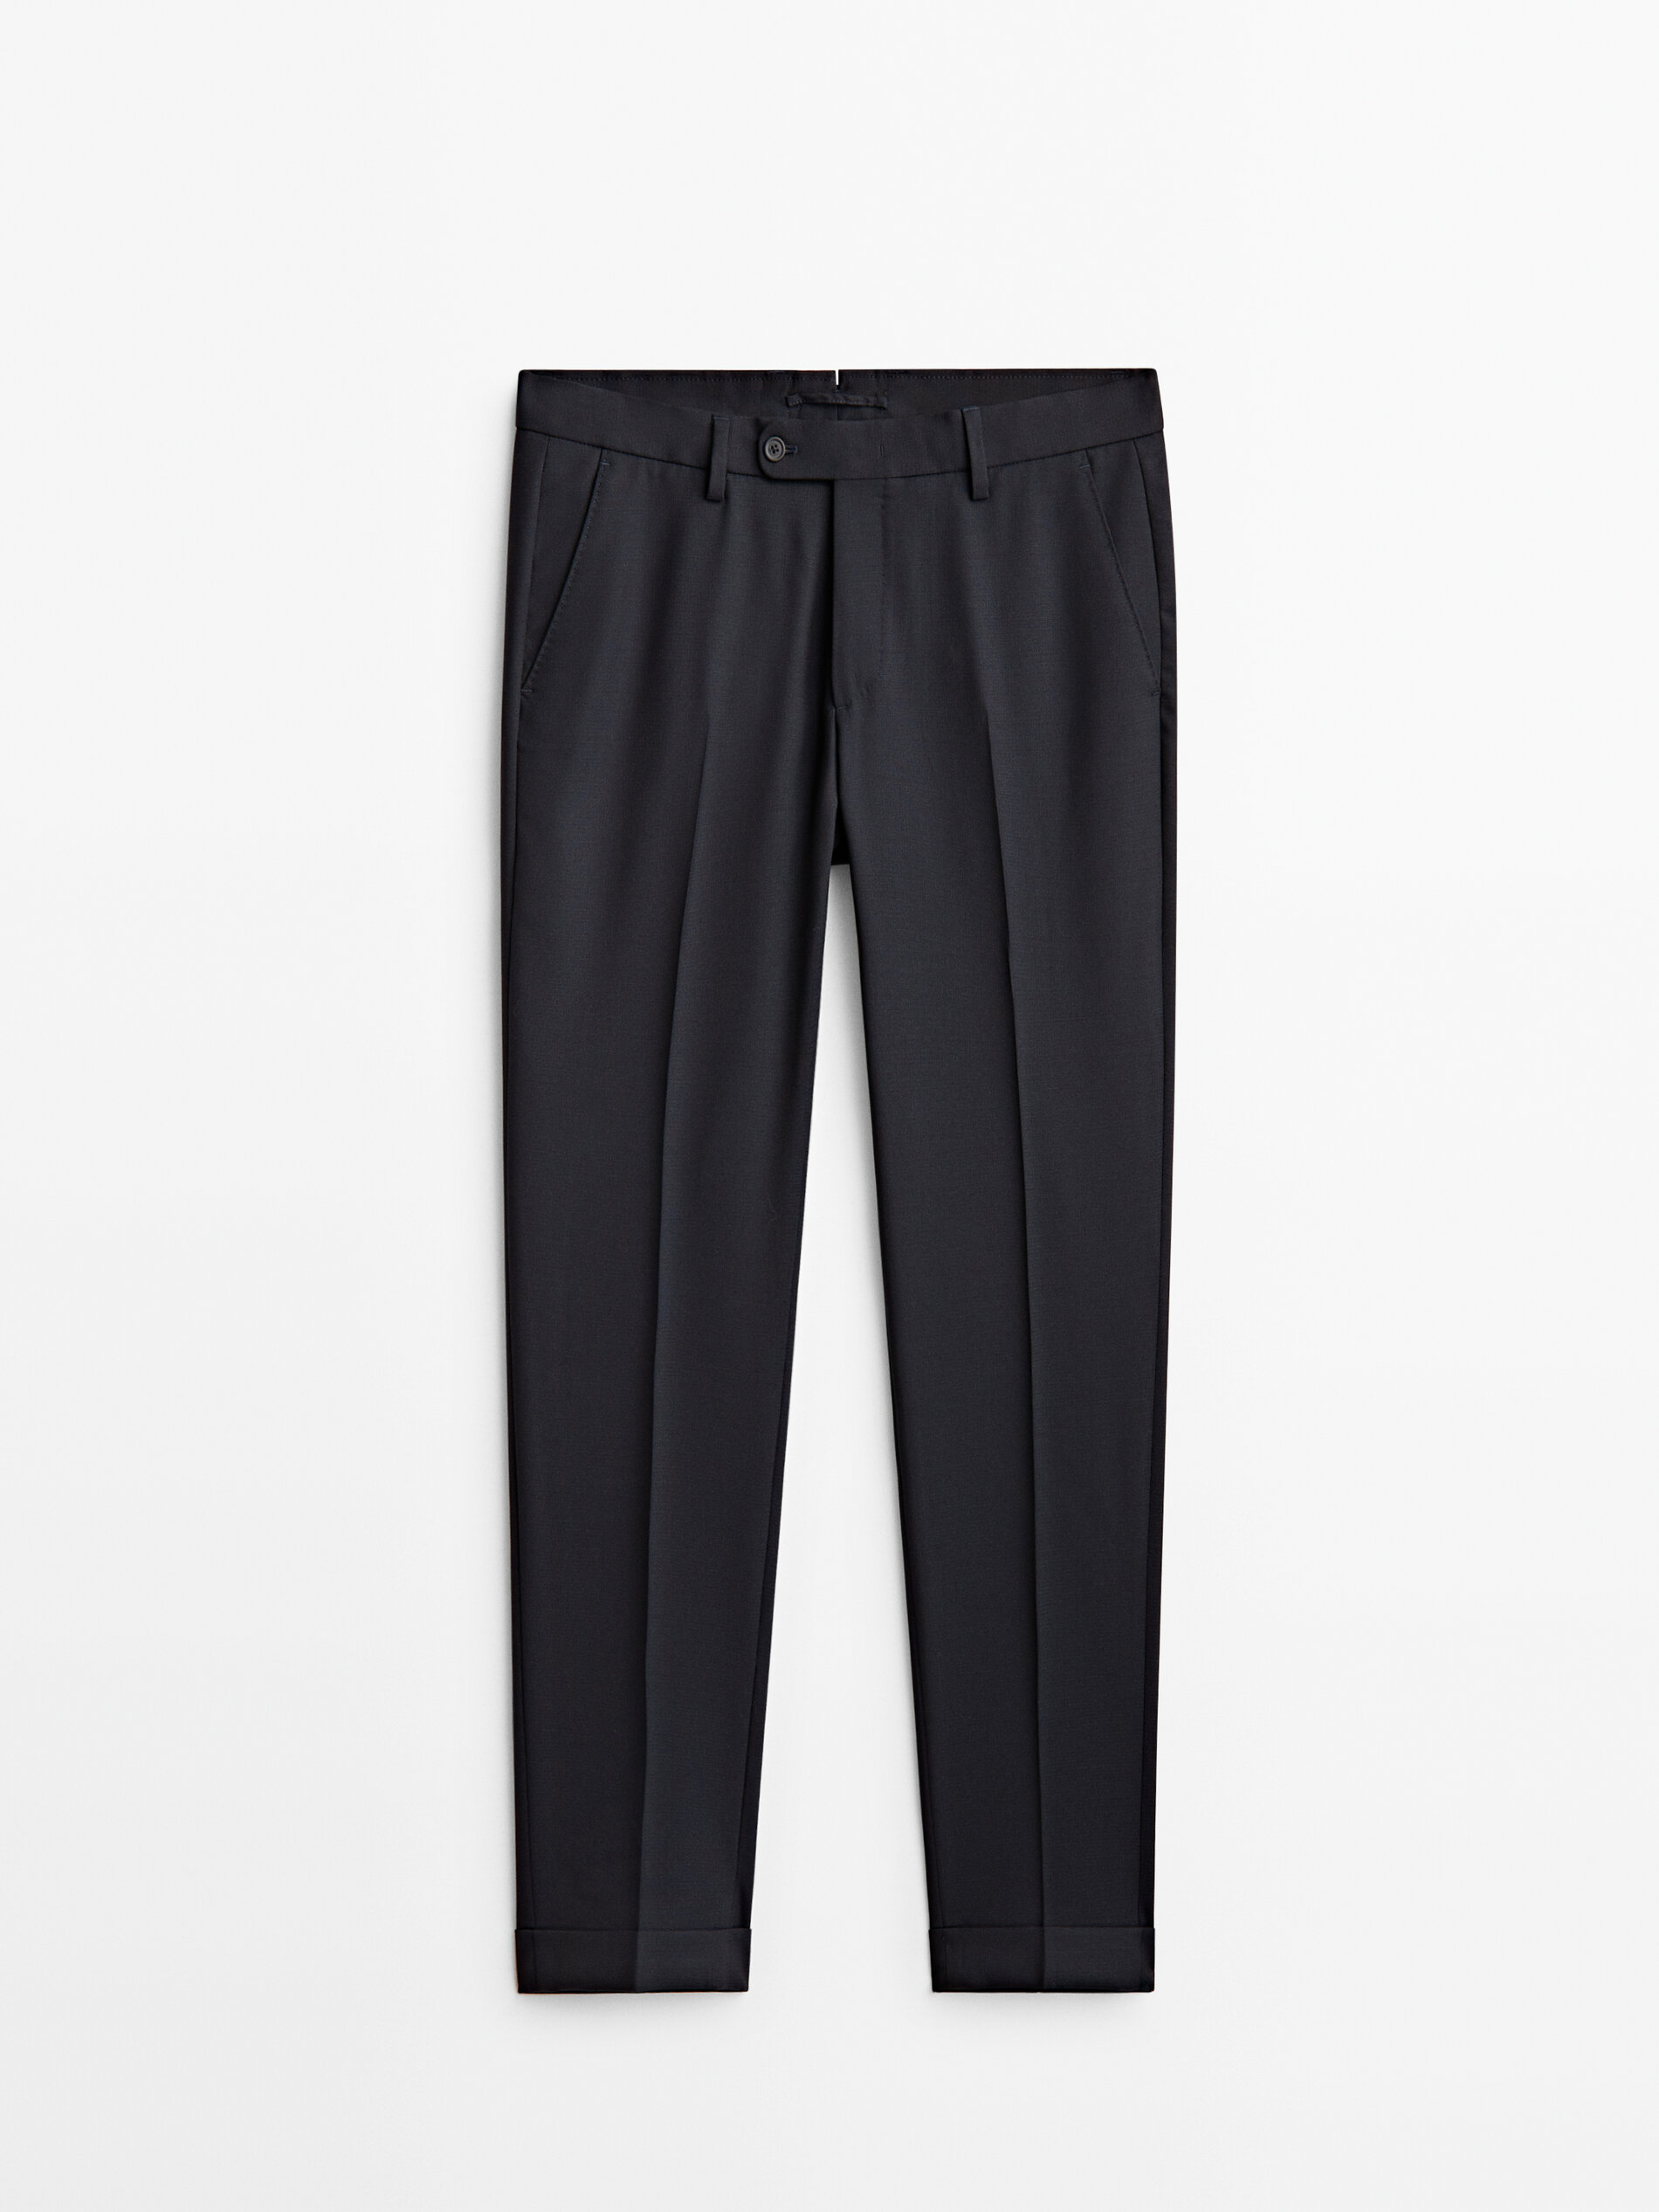 New Look slim suit trousers in dark grey texture | ASOS